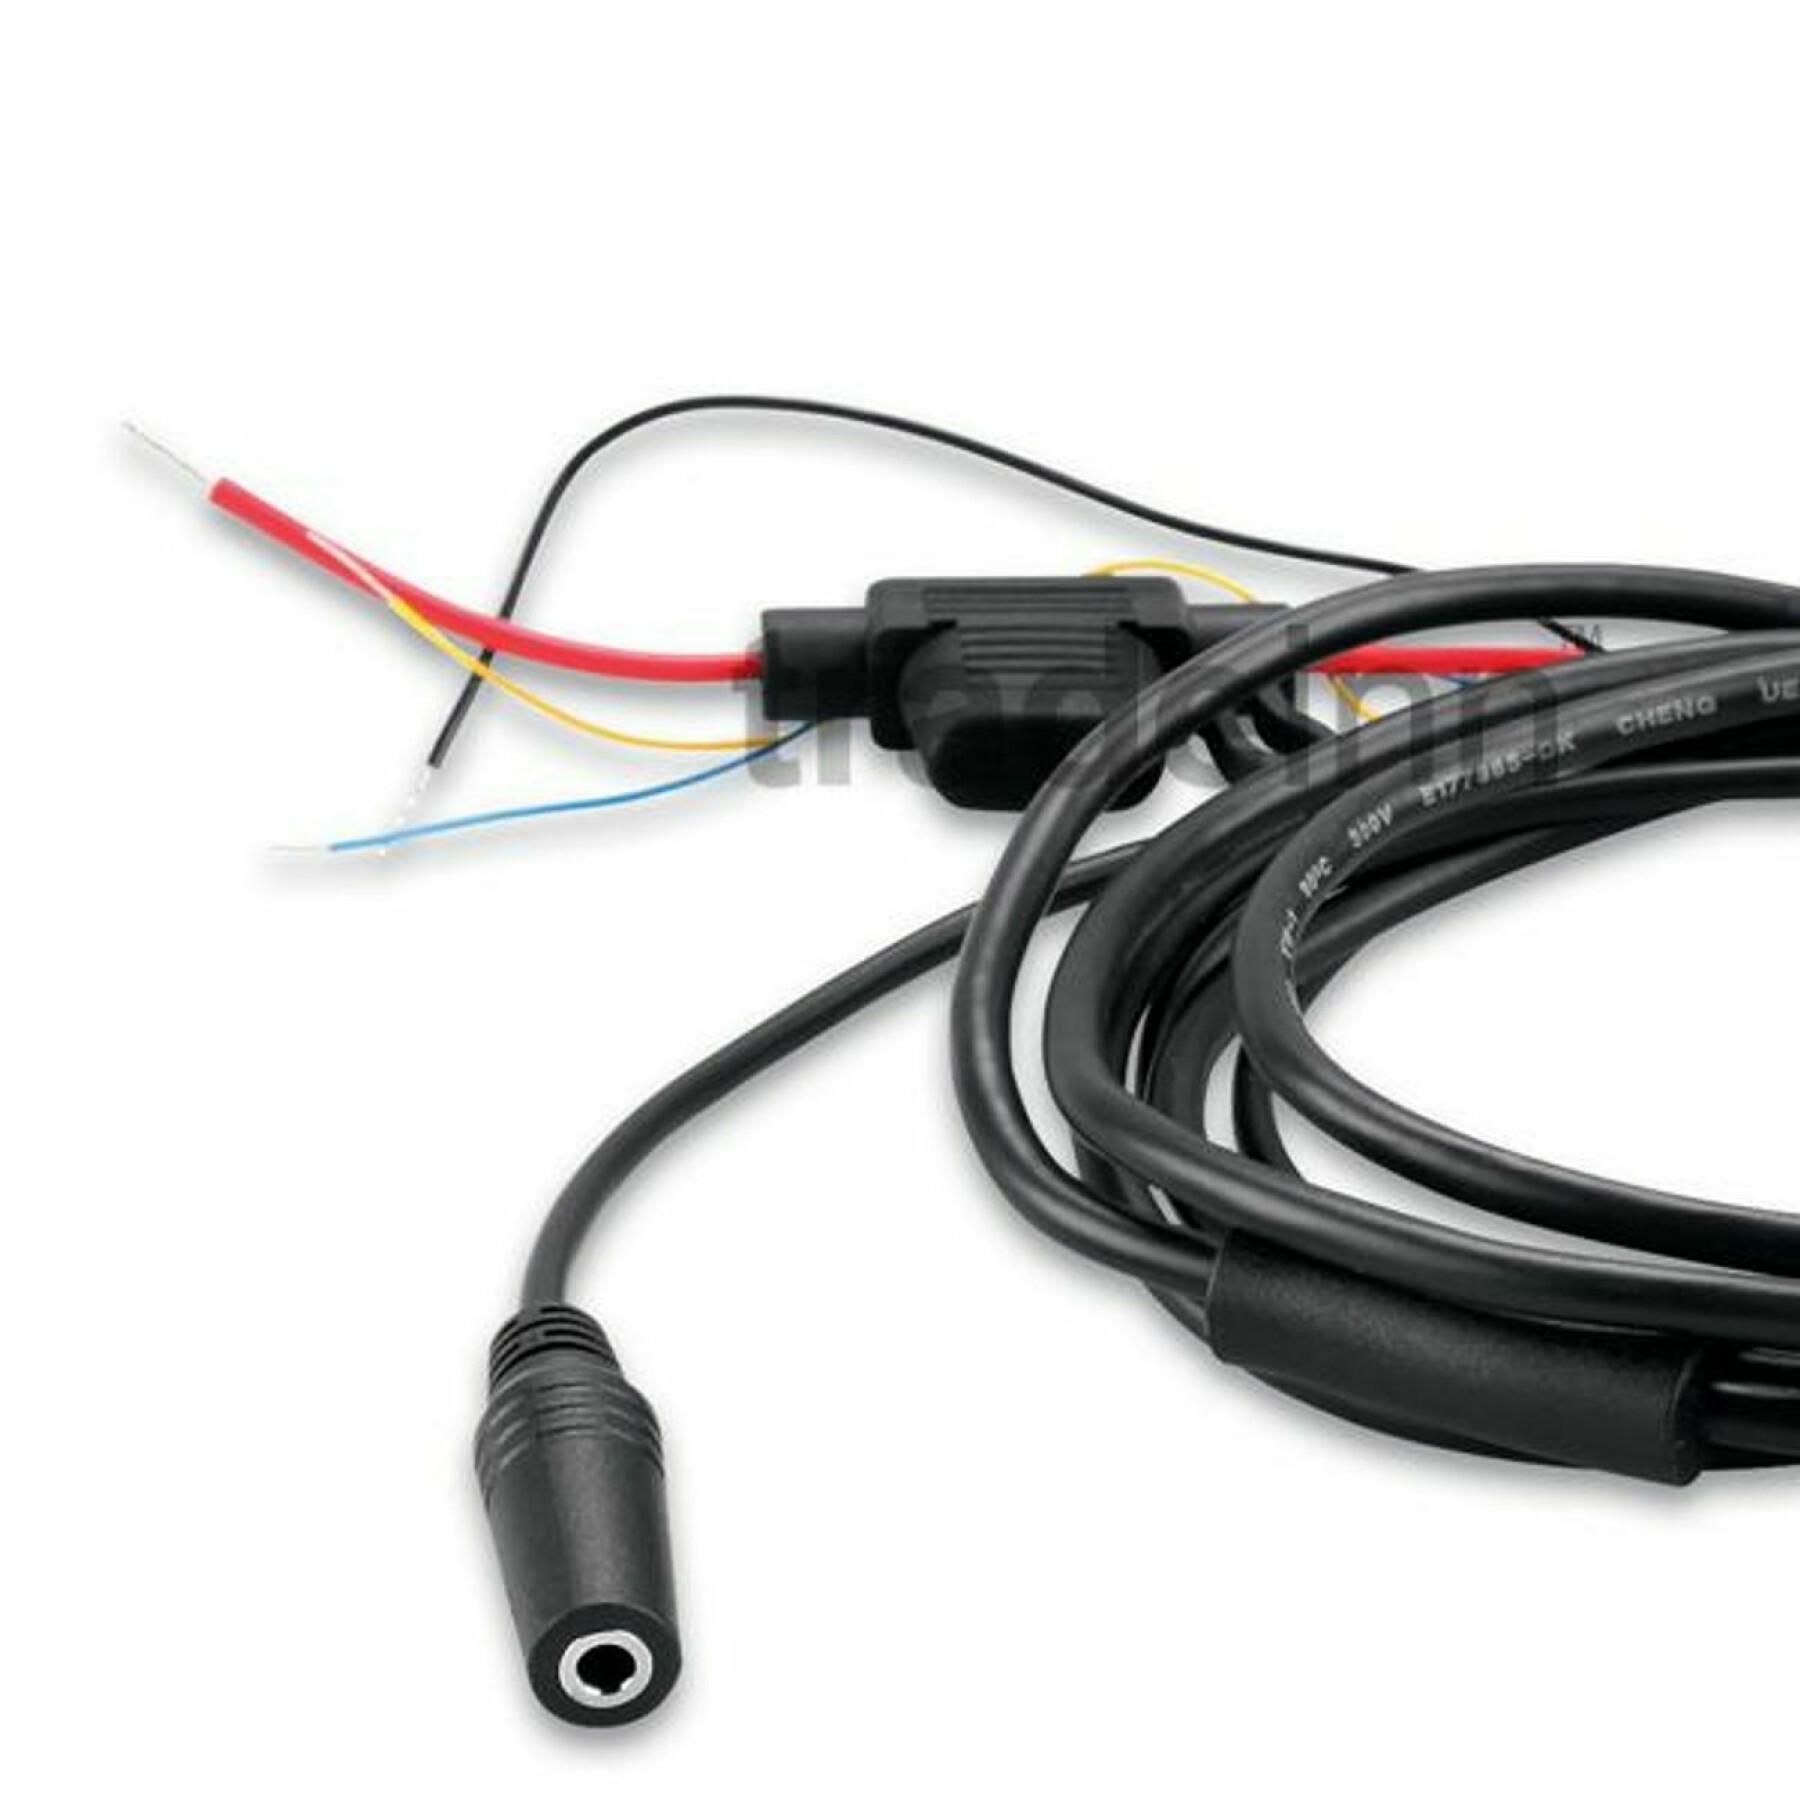 Support Garmin moto avec câble alimentation/audio